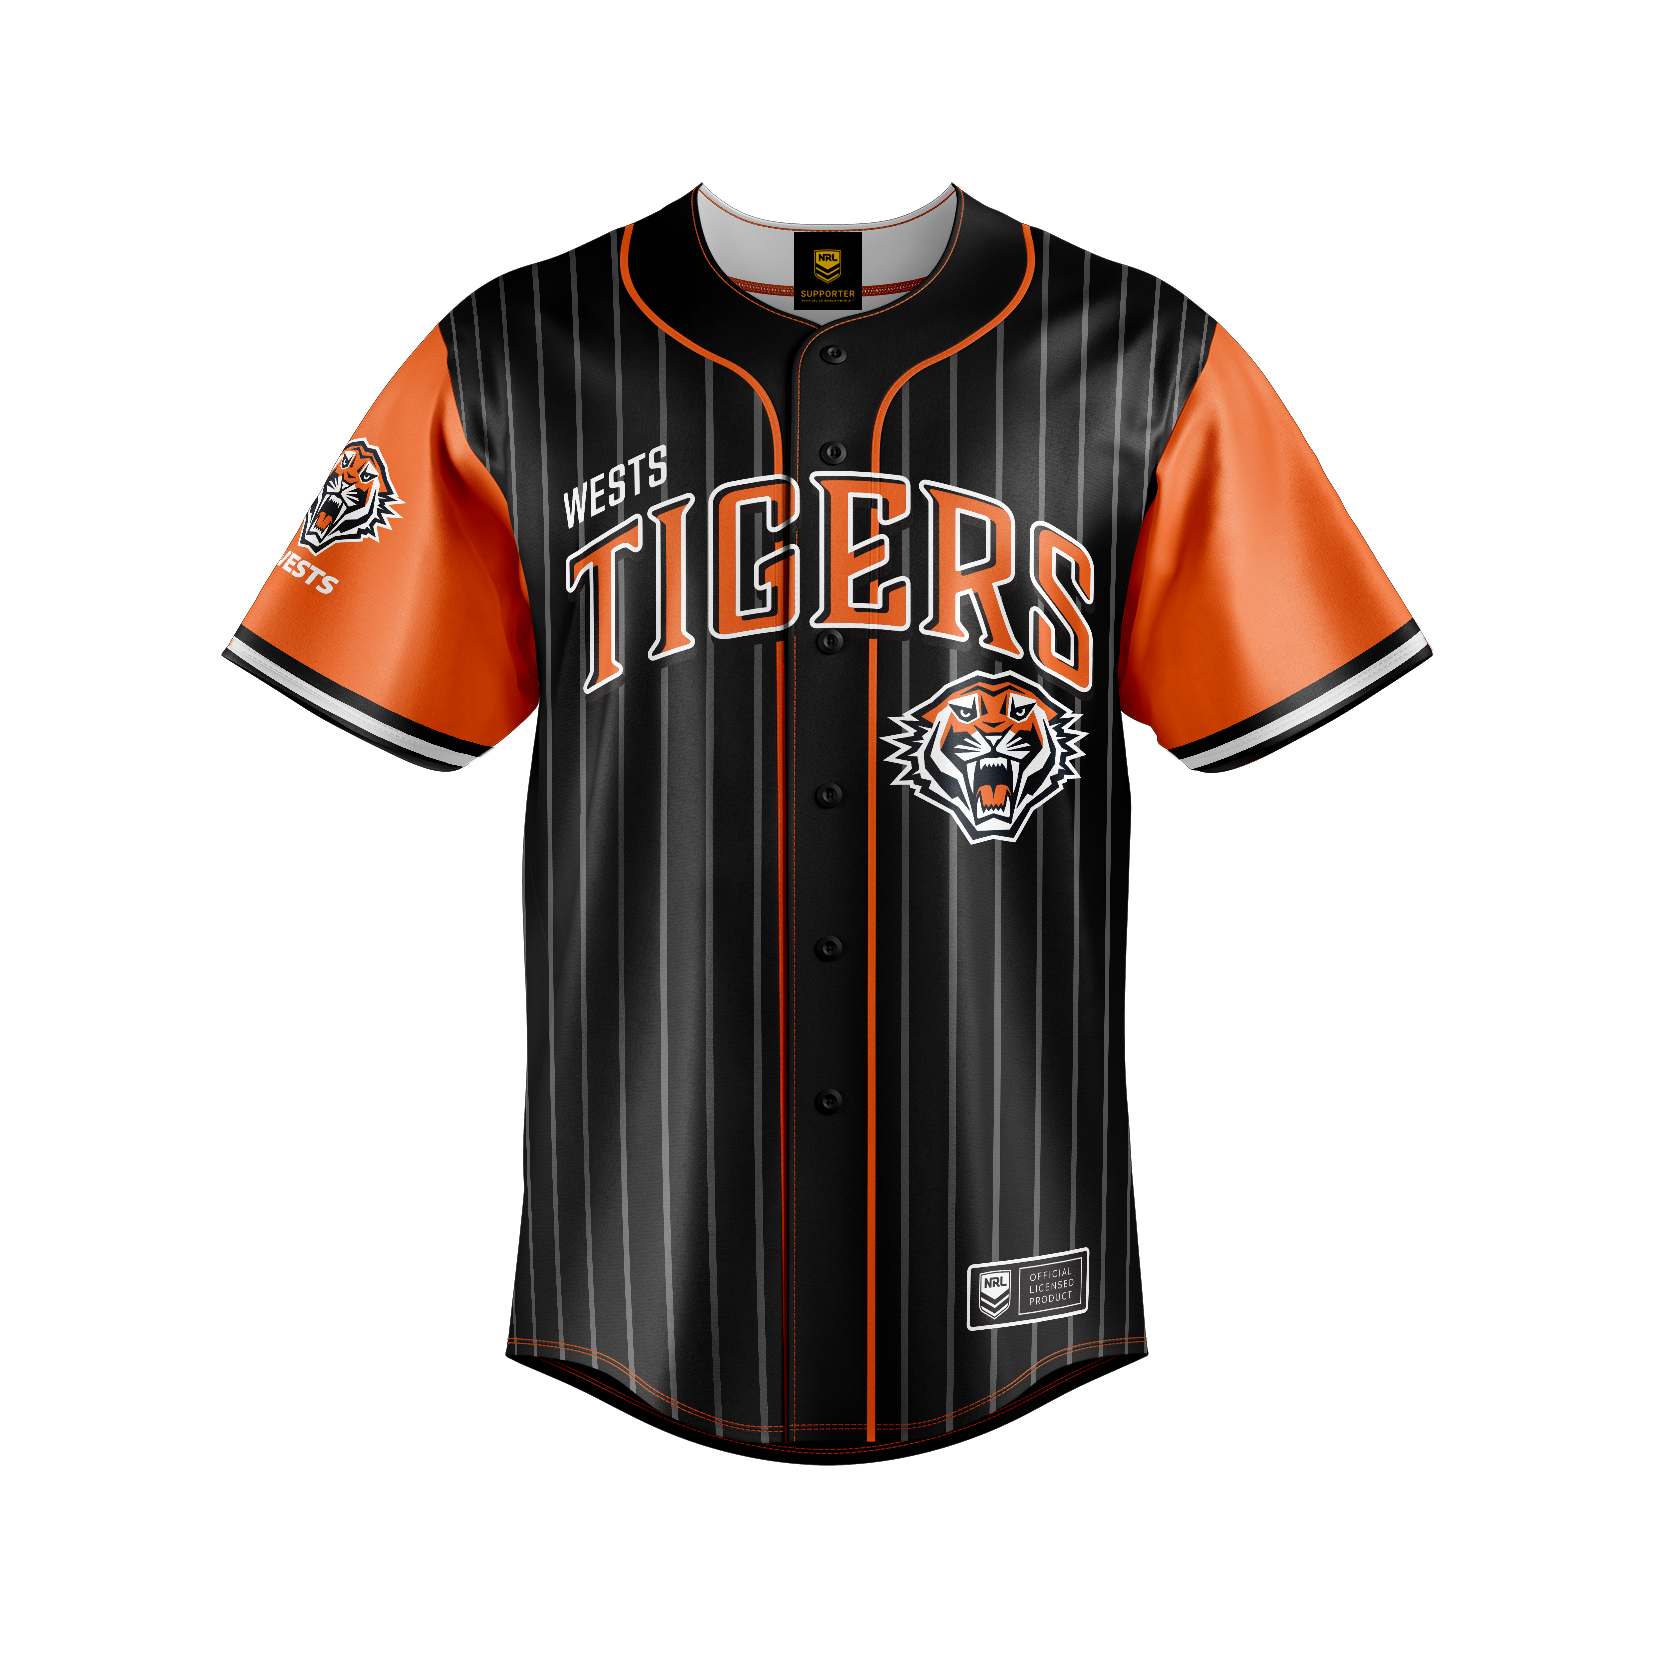 West Tigers "Slugger" Baseball Shirt